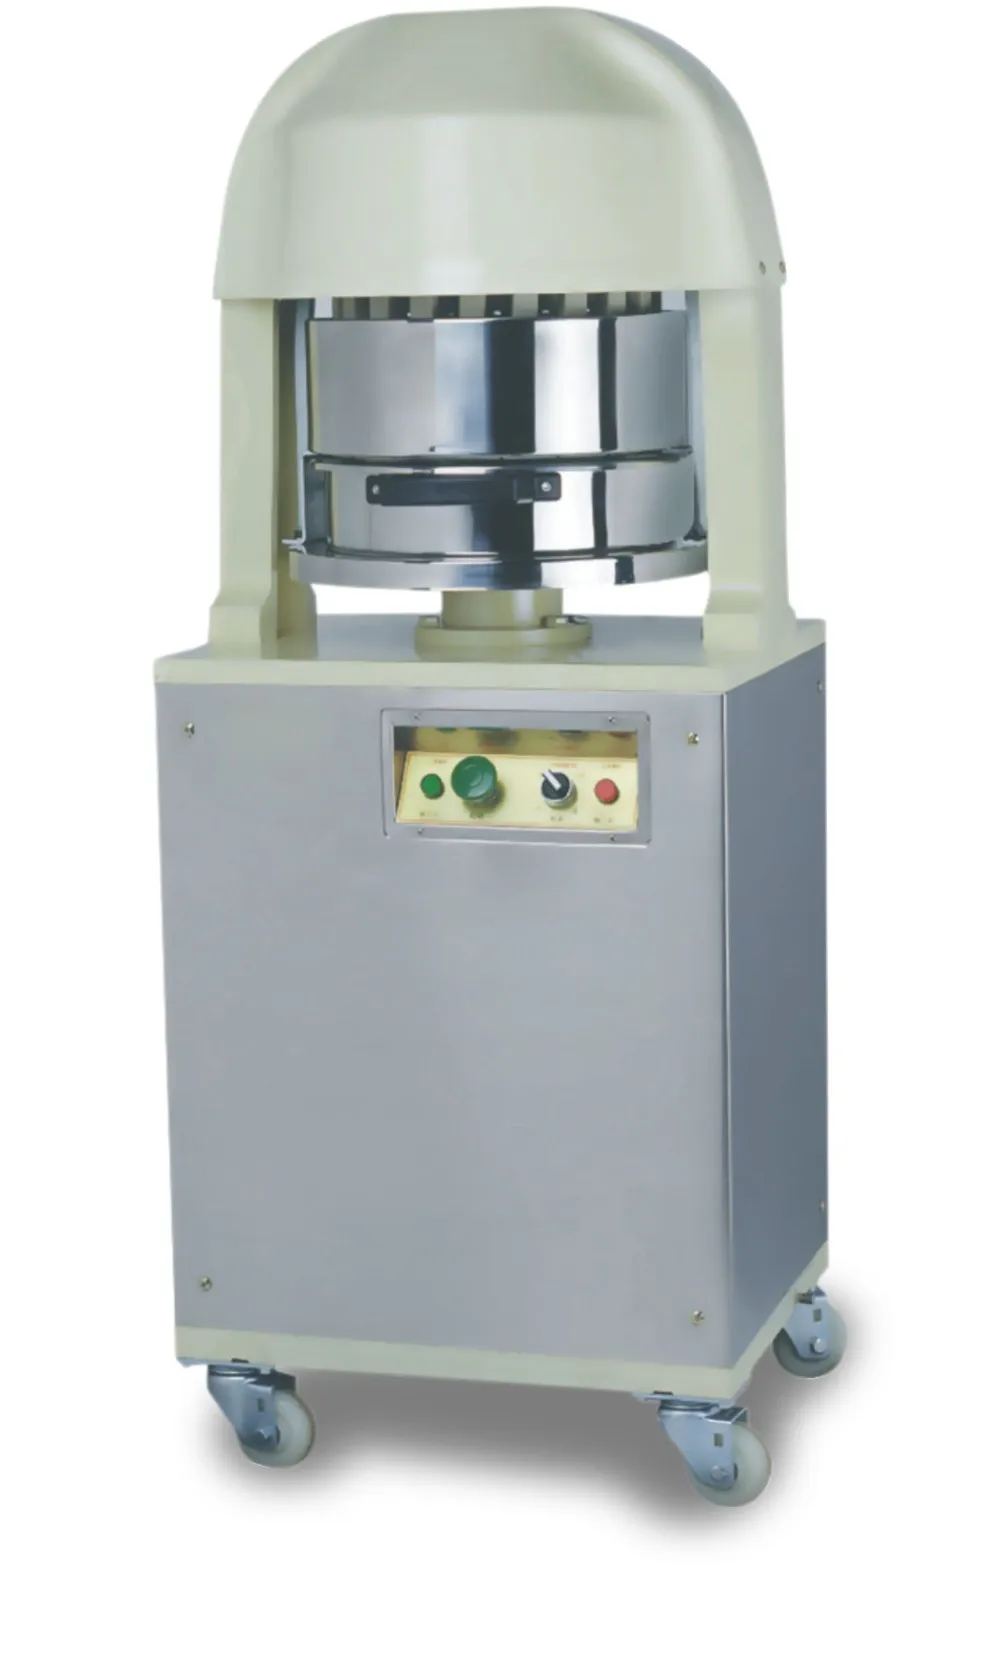 CG-36 Bakery Equipment-Automatic Dough Divider Rounder Machine